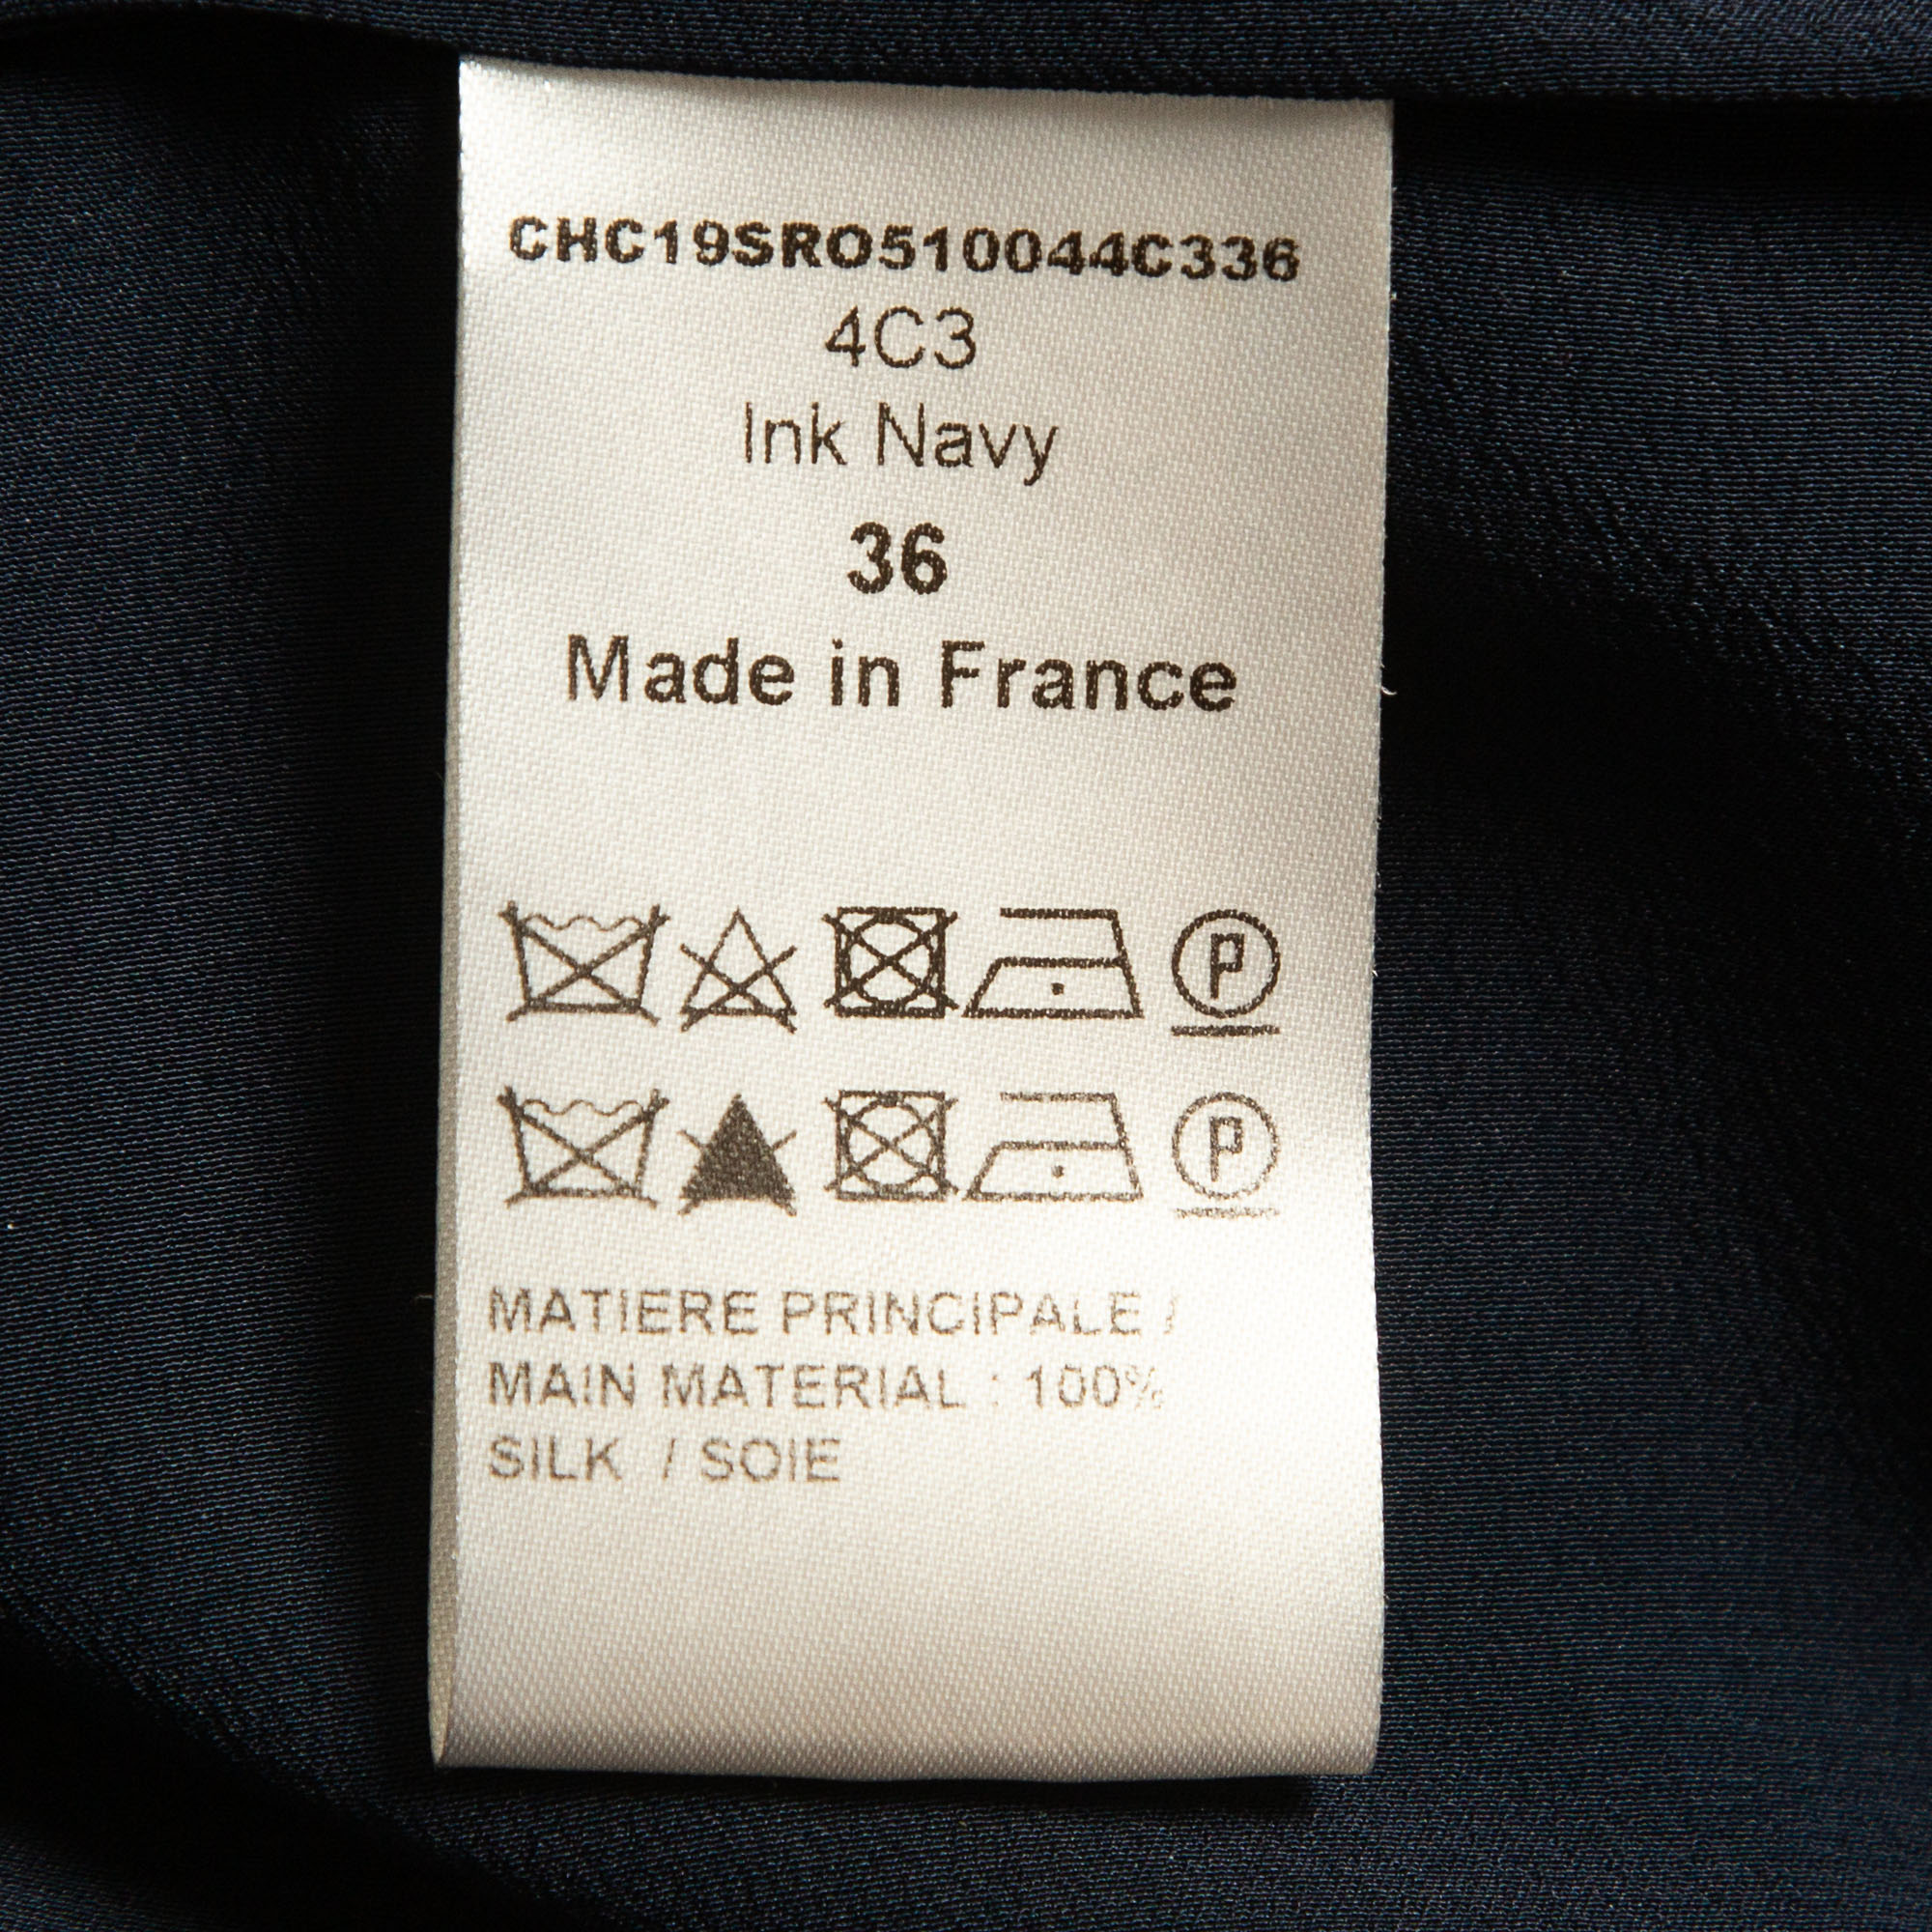 Chloe Navy Blue Silk Button Detail Midi Dress S